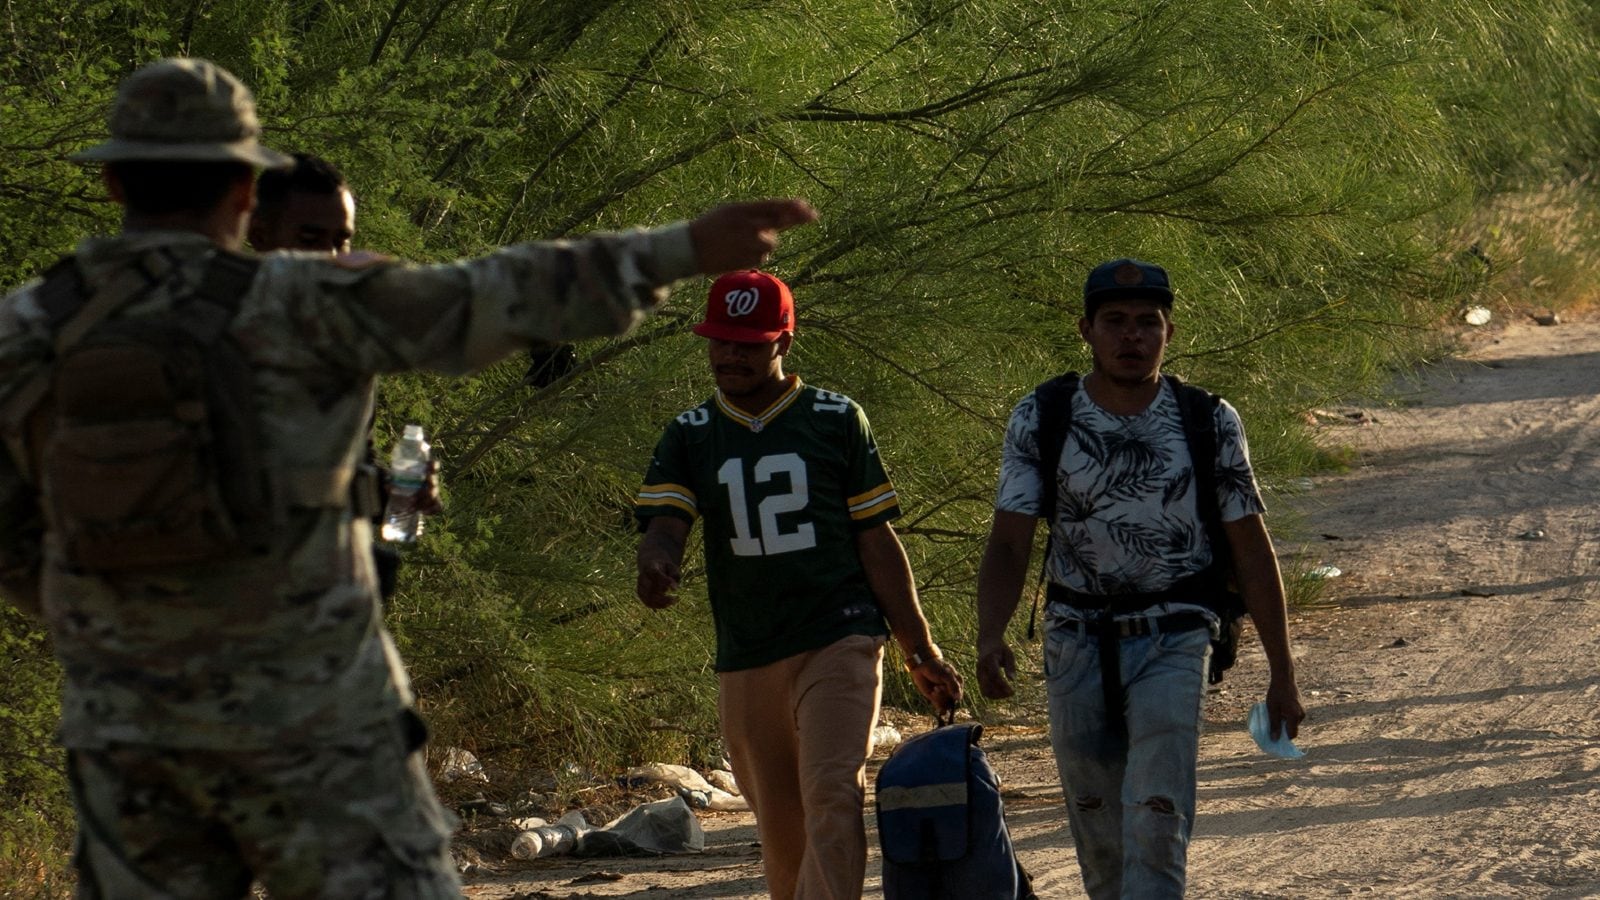 Migrants Crossing into US via Border Ineligible for Asylum